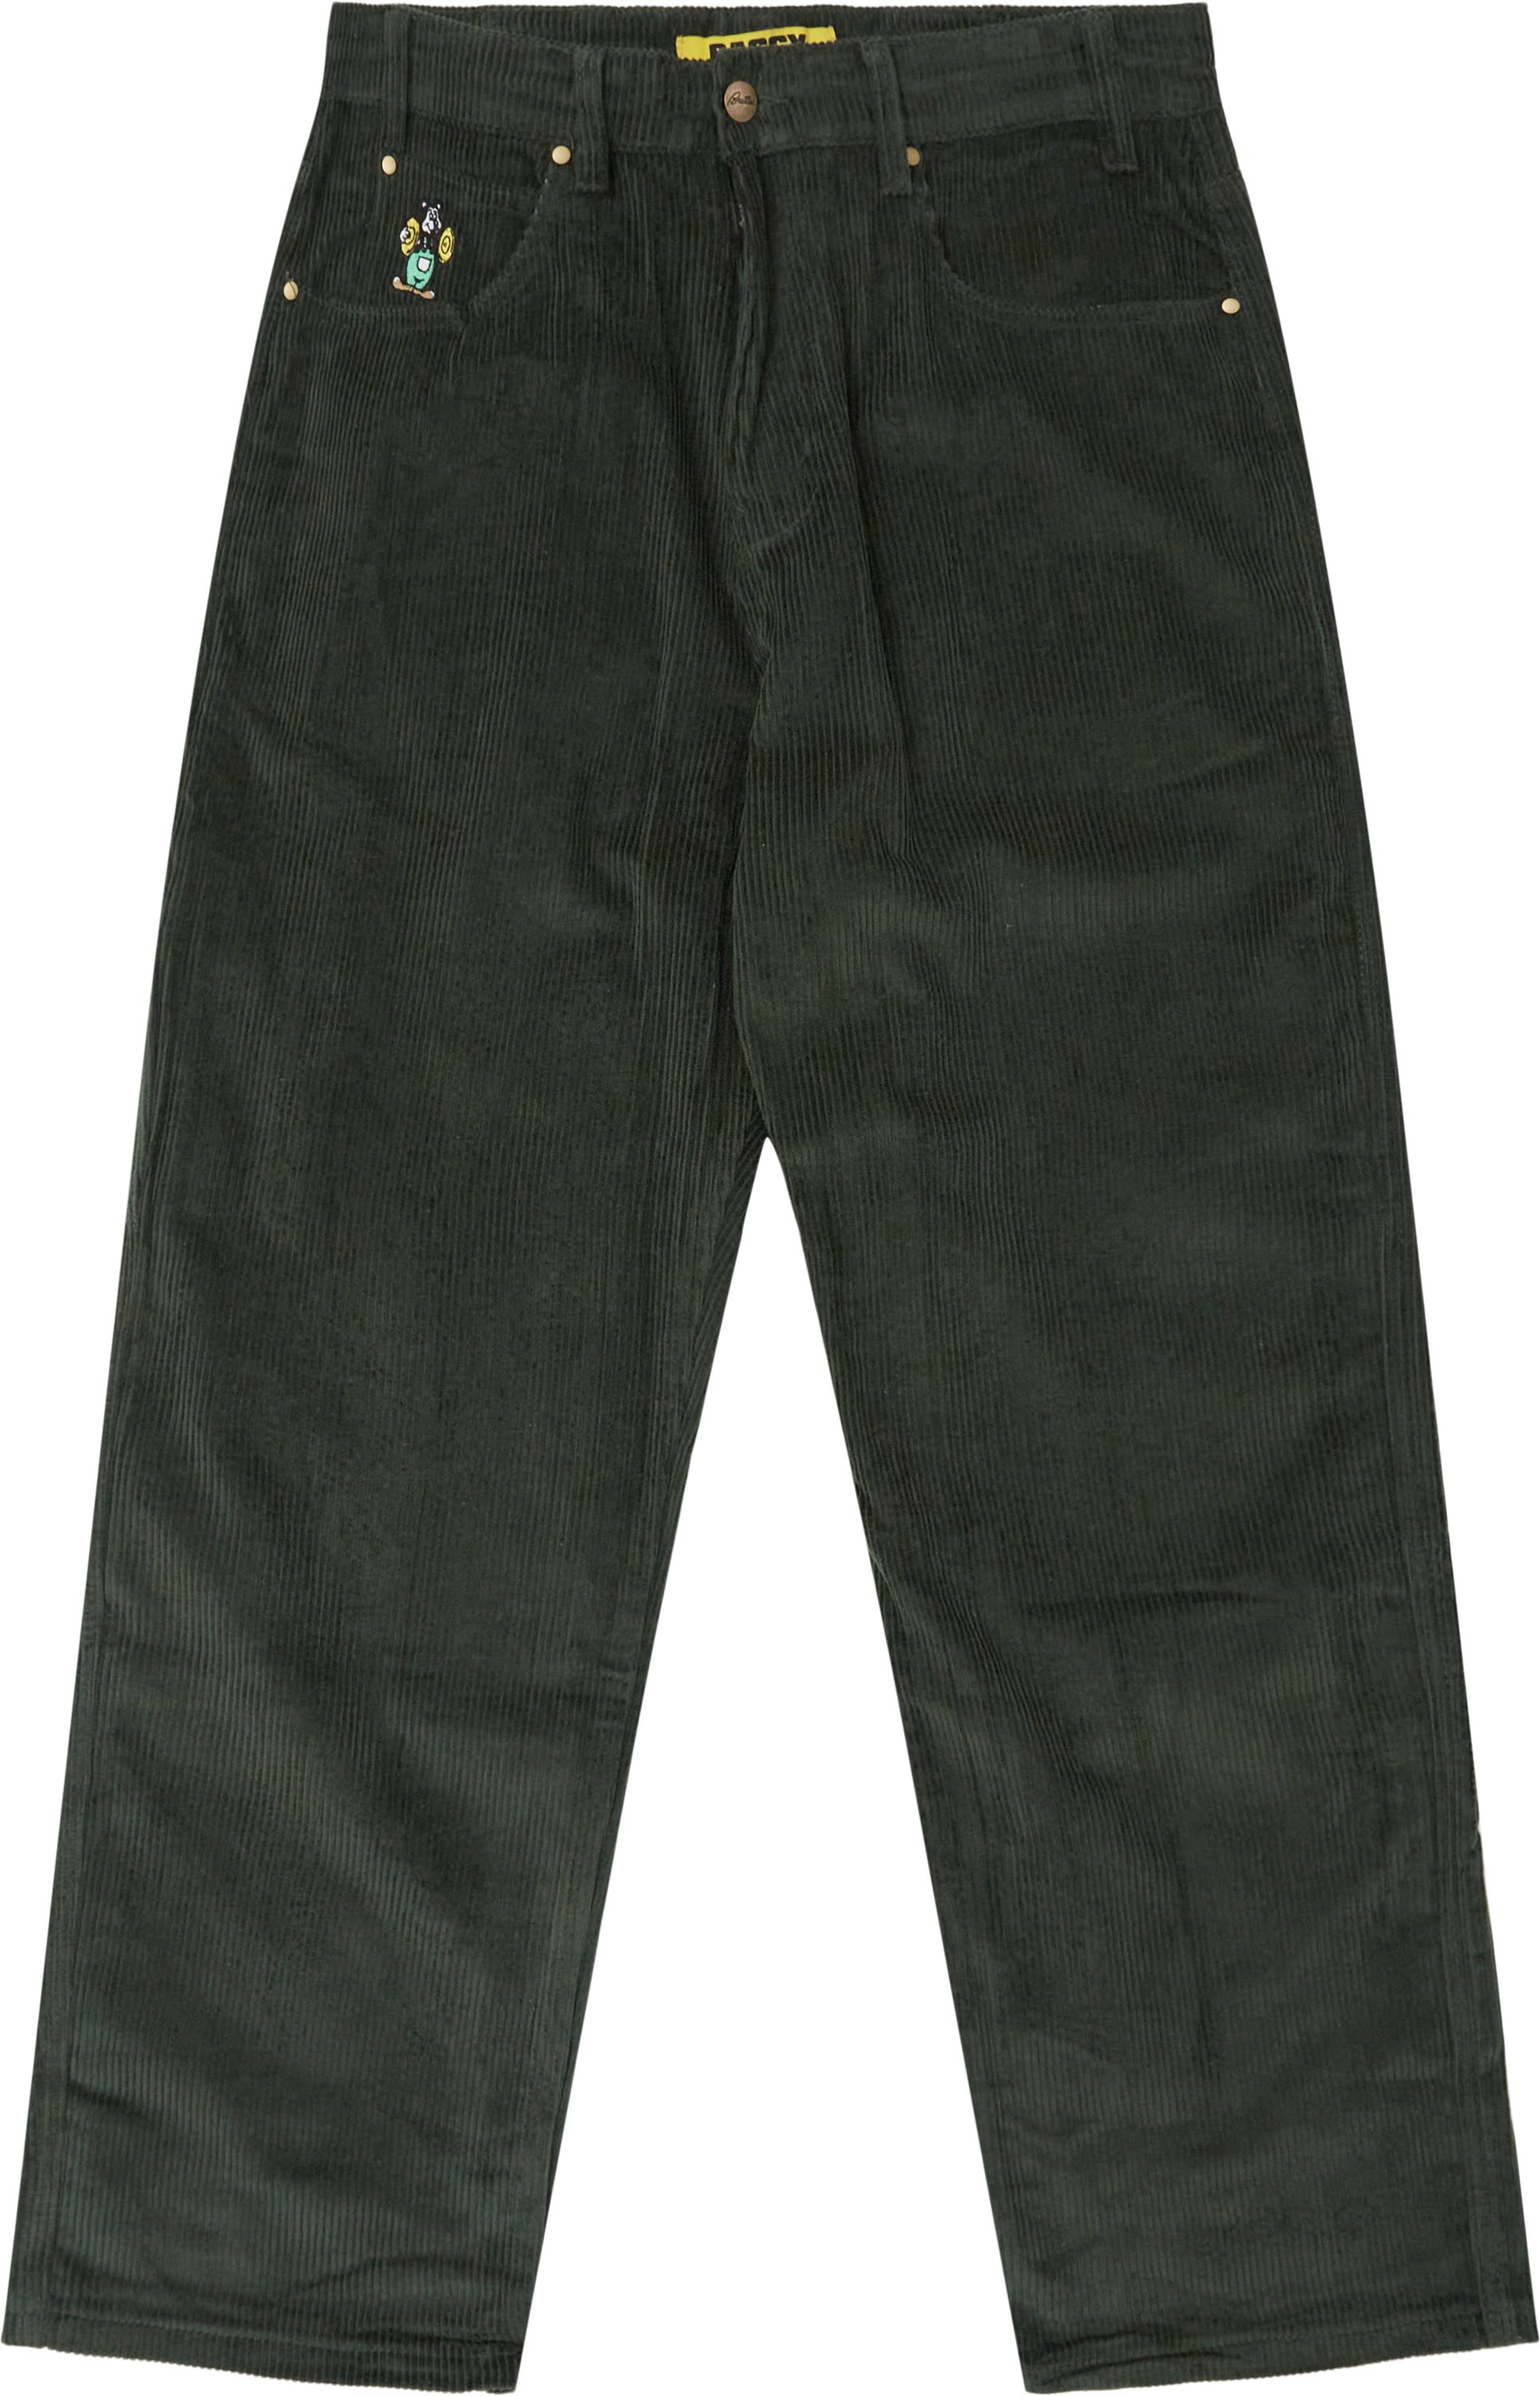 Cymbals Corduroy Pants - Trousers - Regular fit - Green